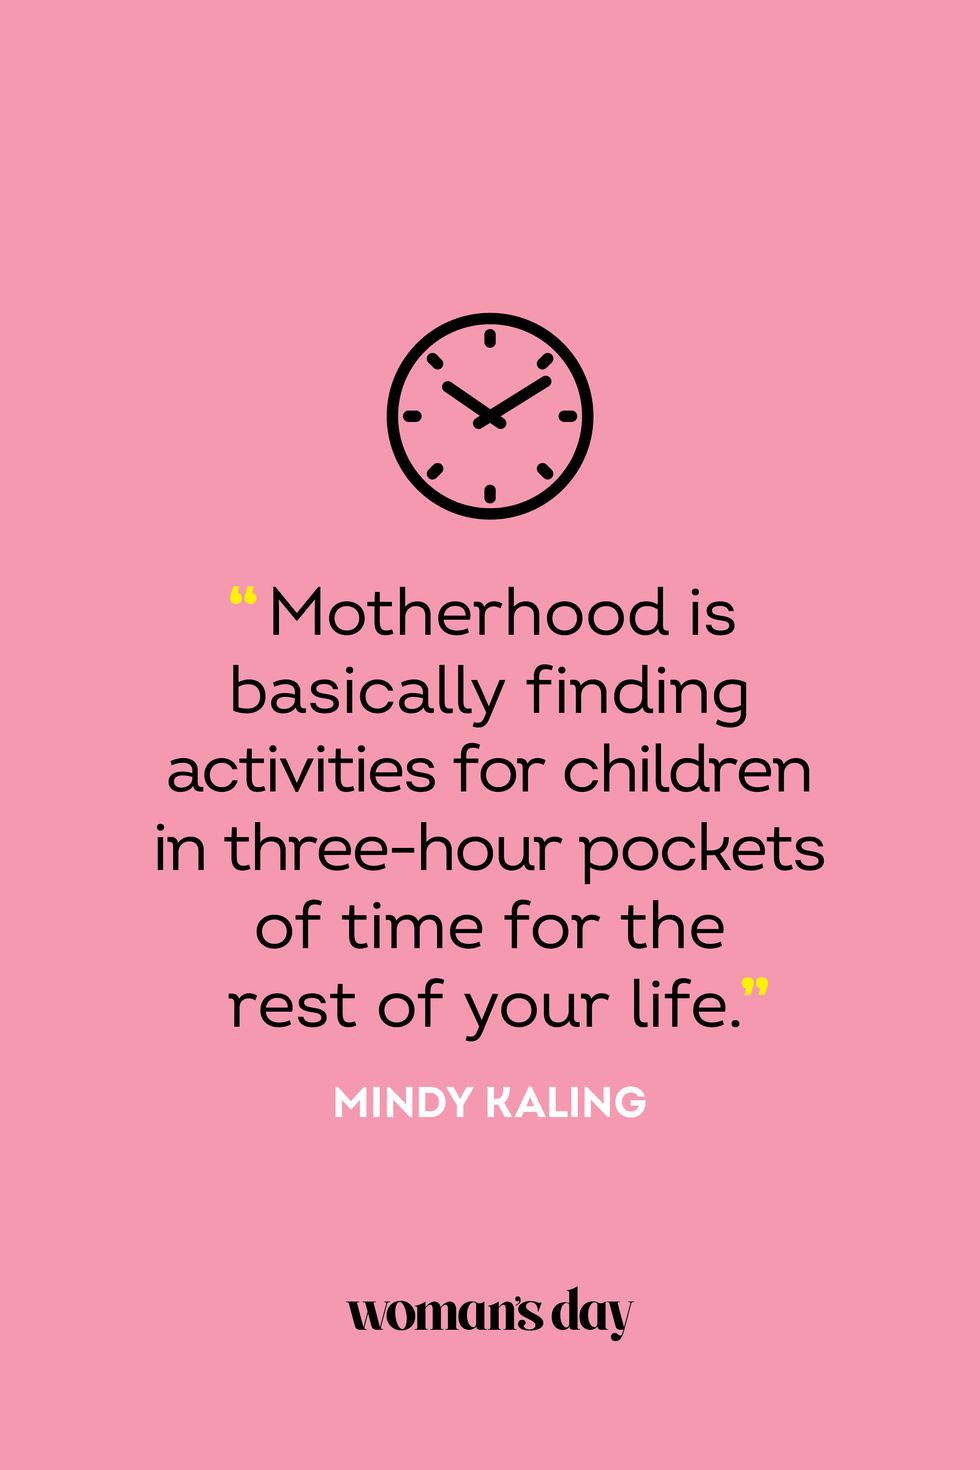 50 Funny Mom Quotes - Hilarious Motherhood Sayings